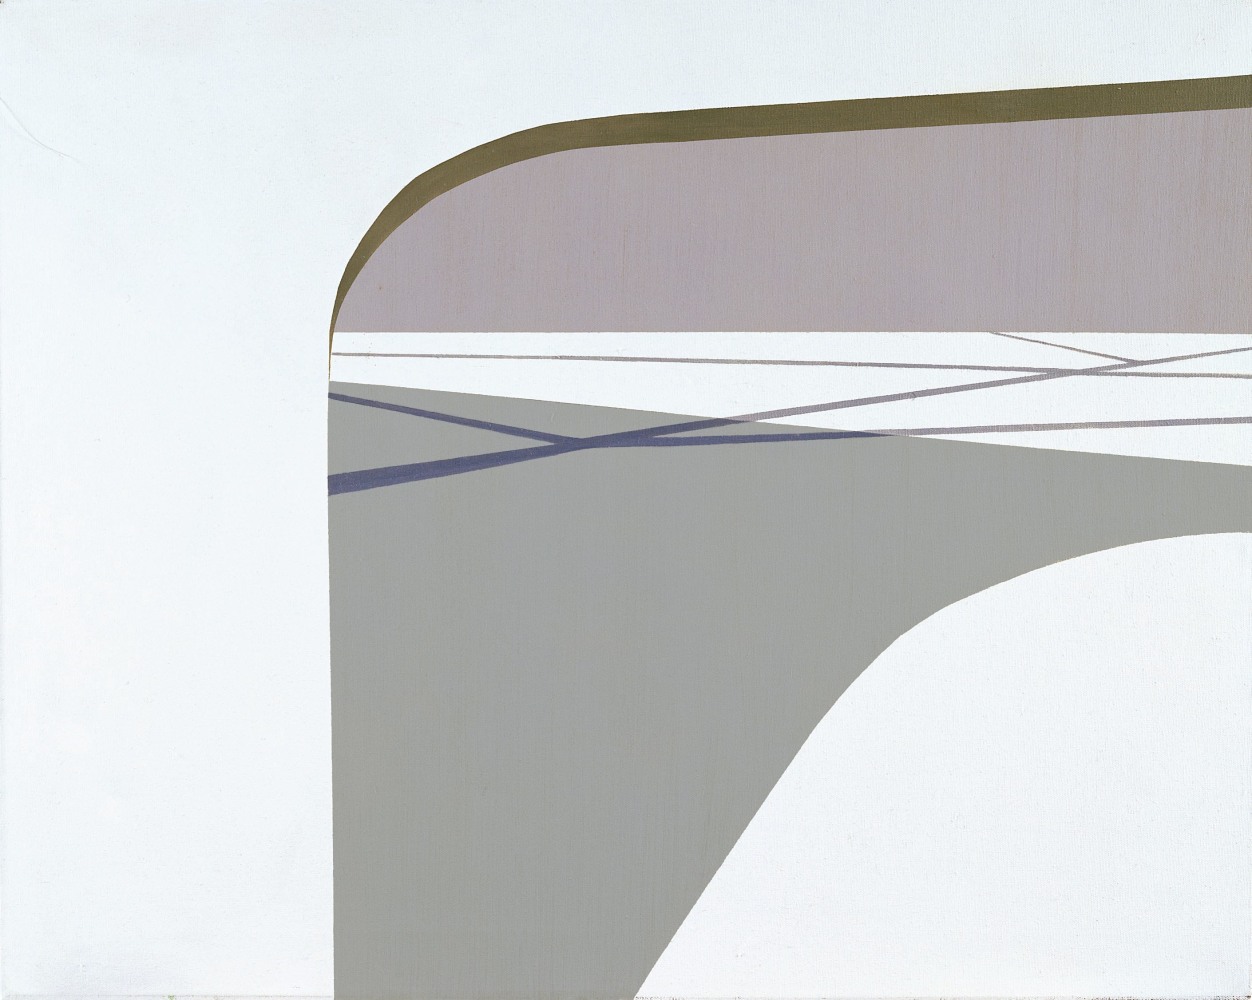 Shadow of the Bridge I,&amp;nbsp;1962

Oil on canvas

24 x 30 inches&amp;nbsp;&amp;nbsp;&amp;nbsp;&amp;nbsp;